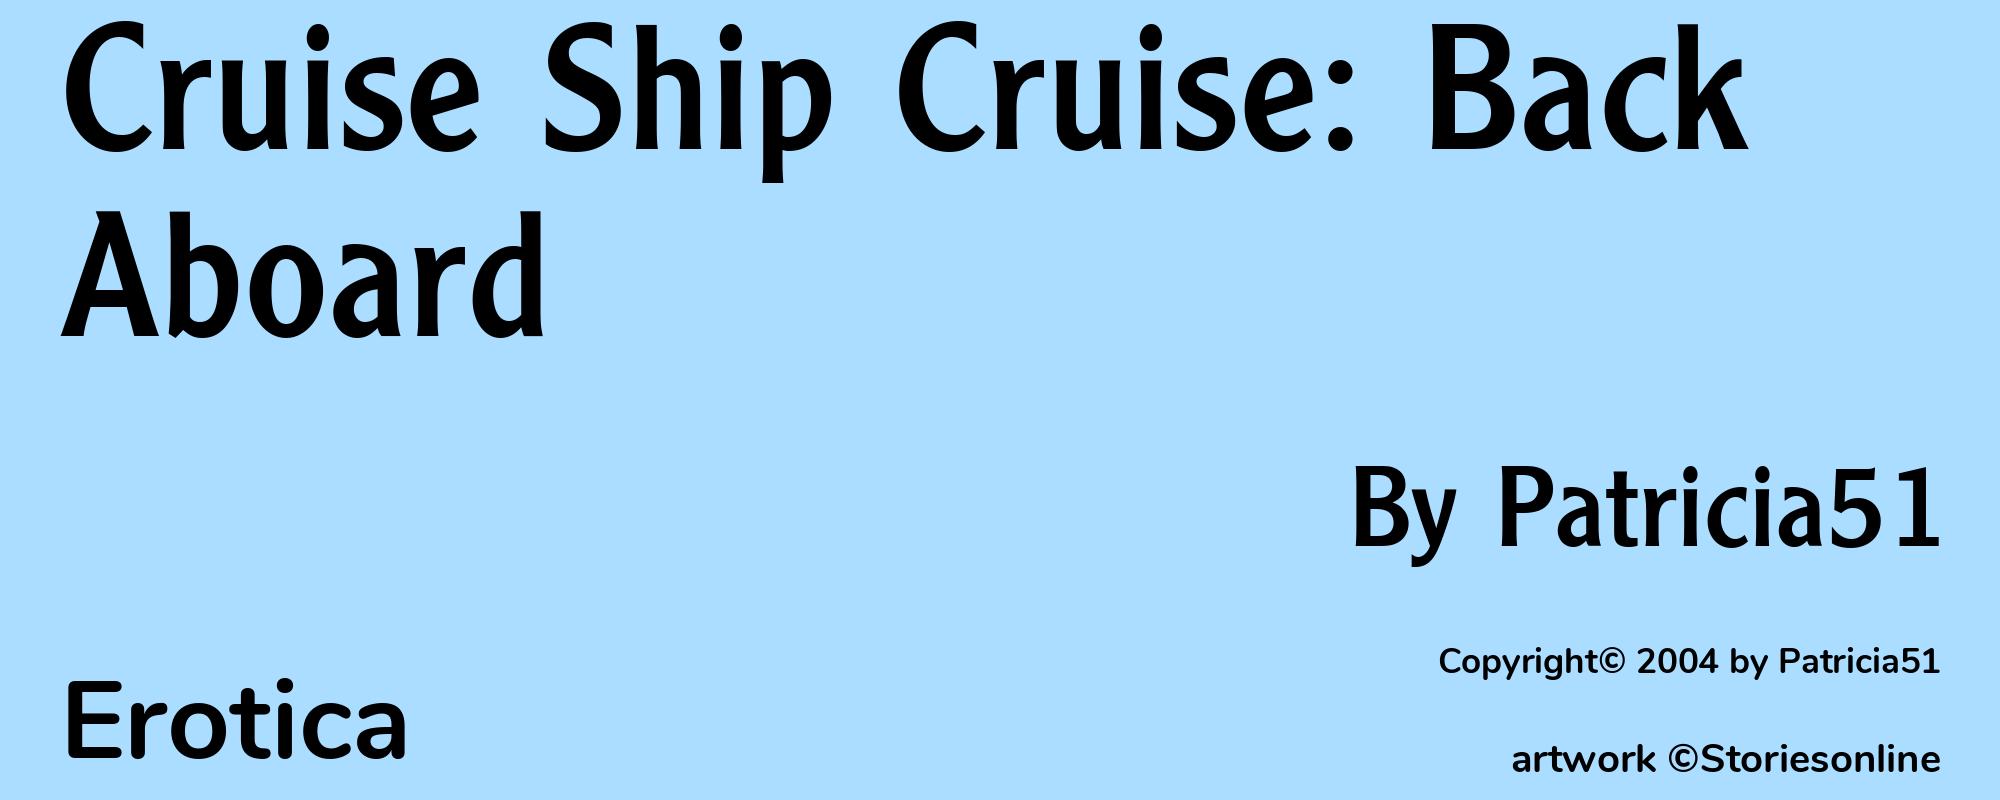 Cruise Ship Cruise: Back Aboard - Cover